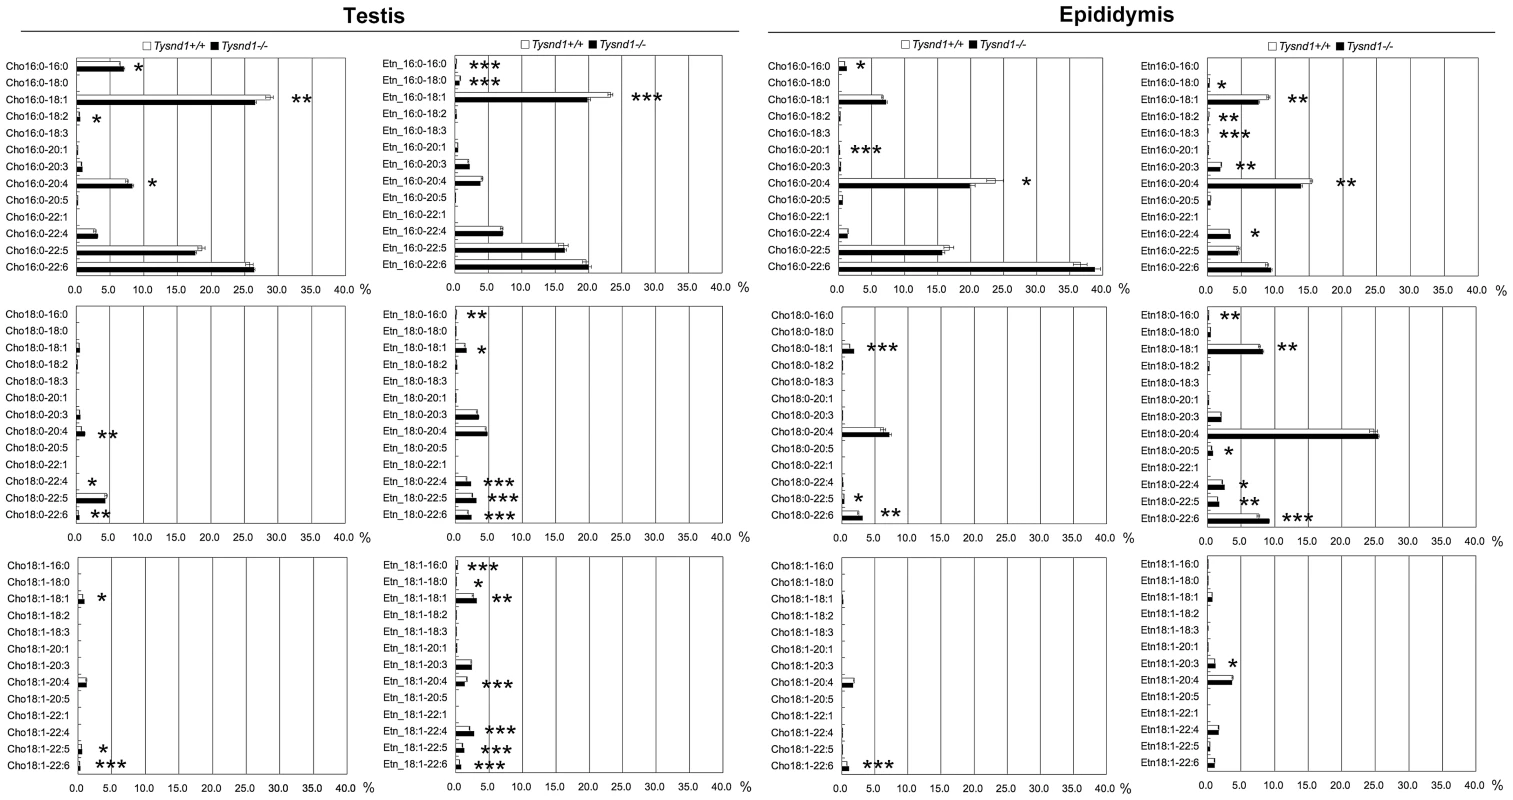 The composition of plasmalogen molecular species (%) in testes and epididymides.